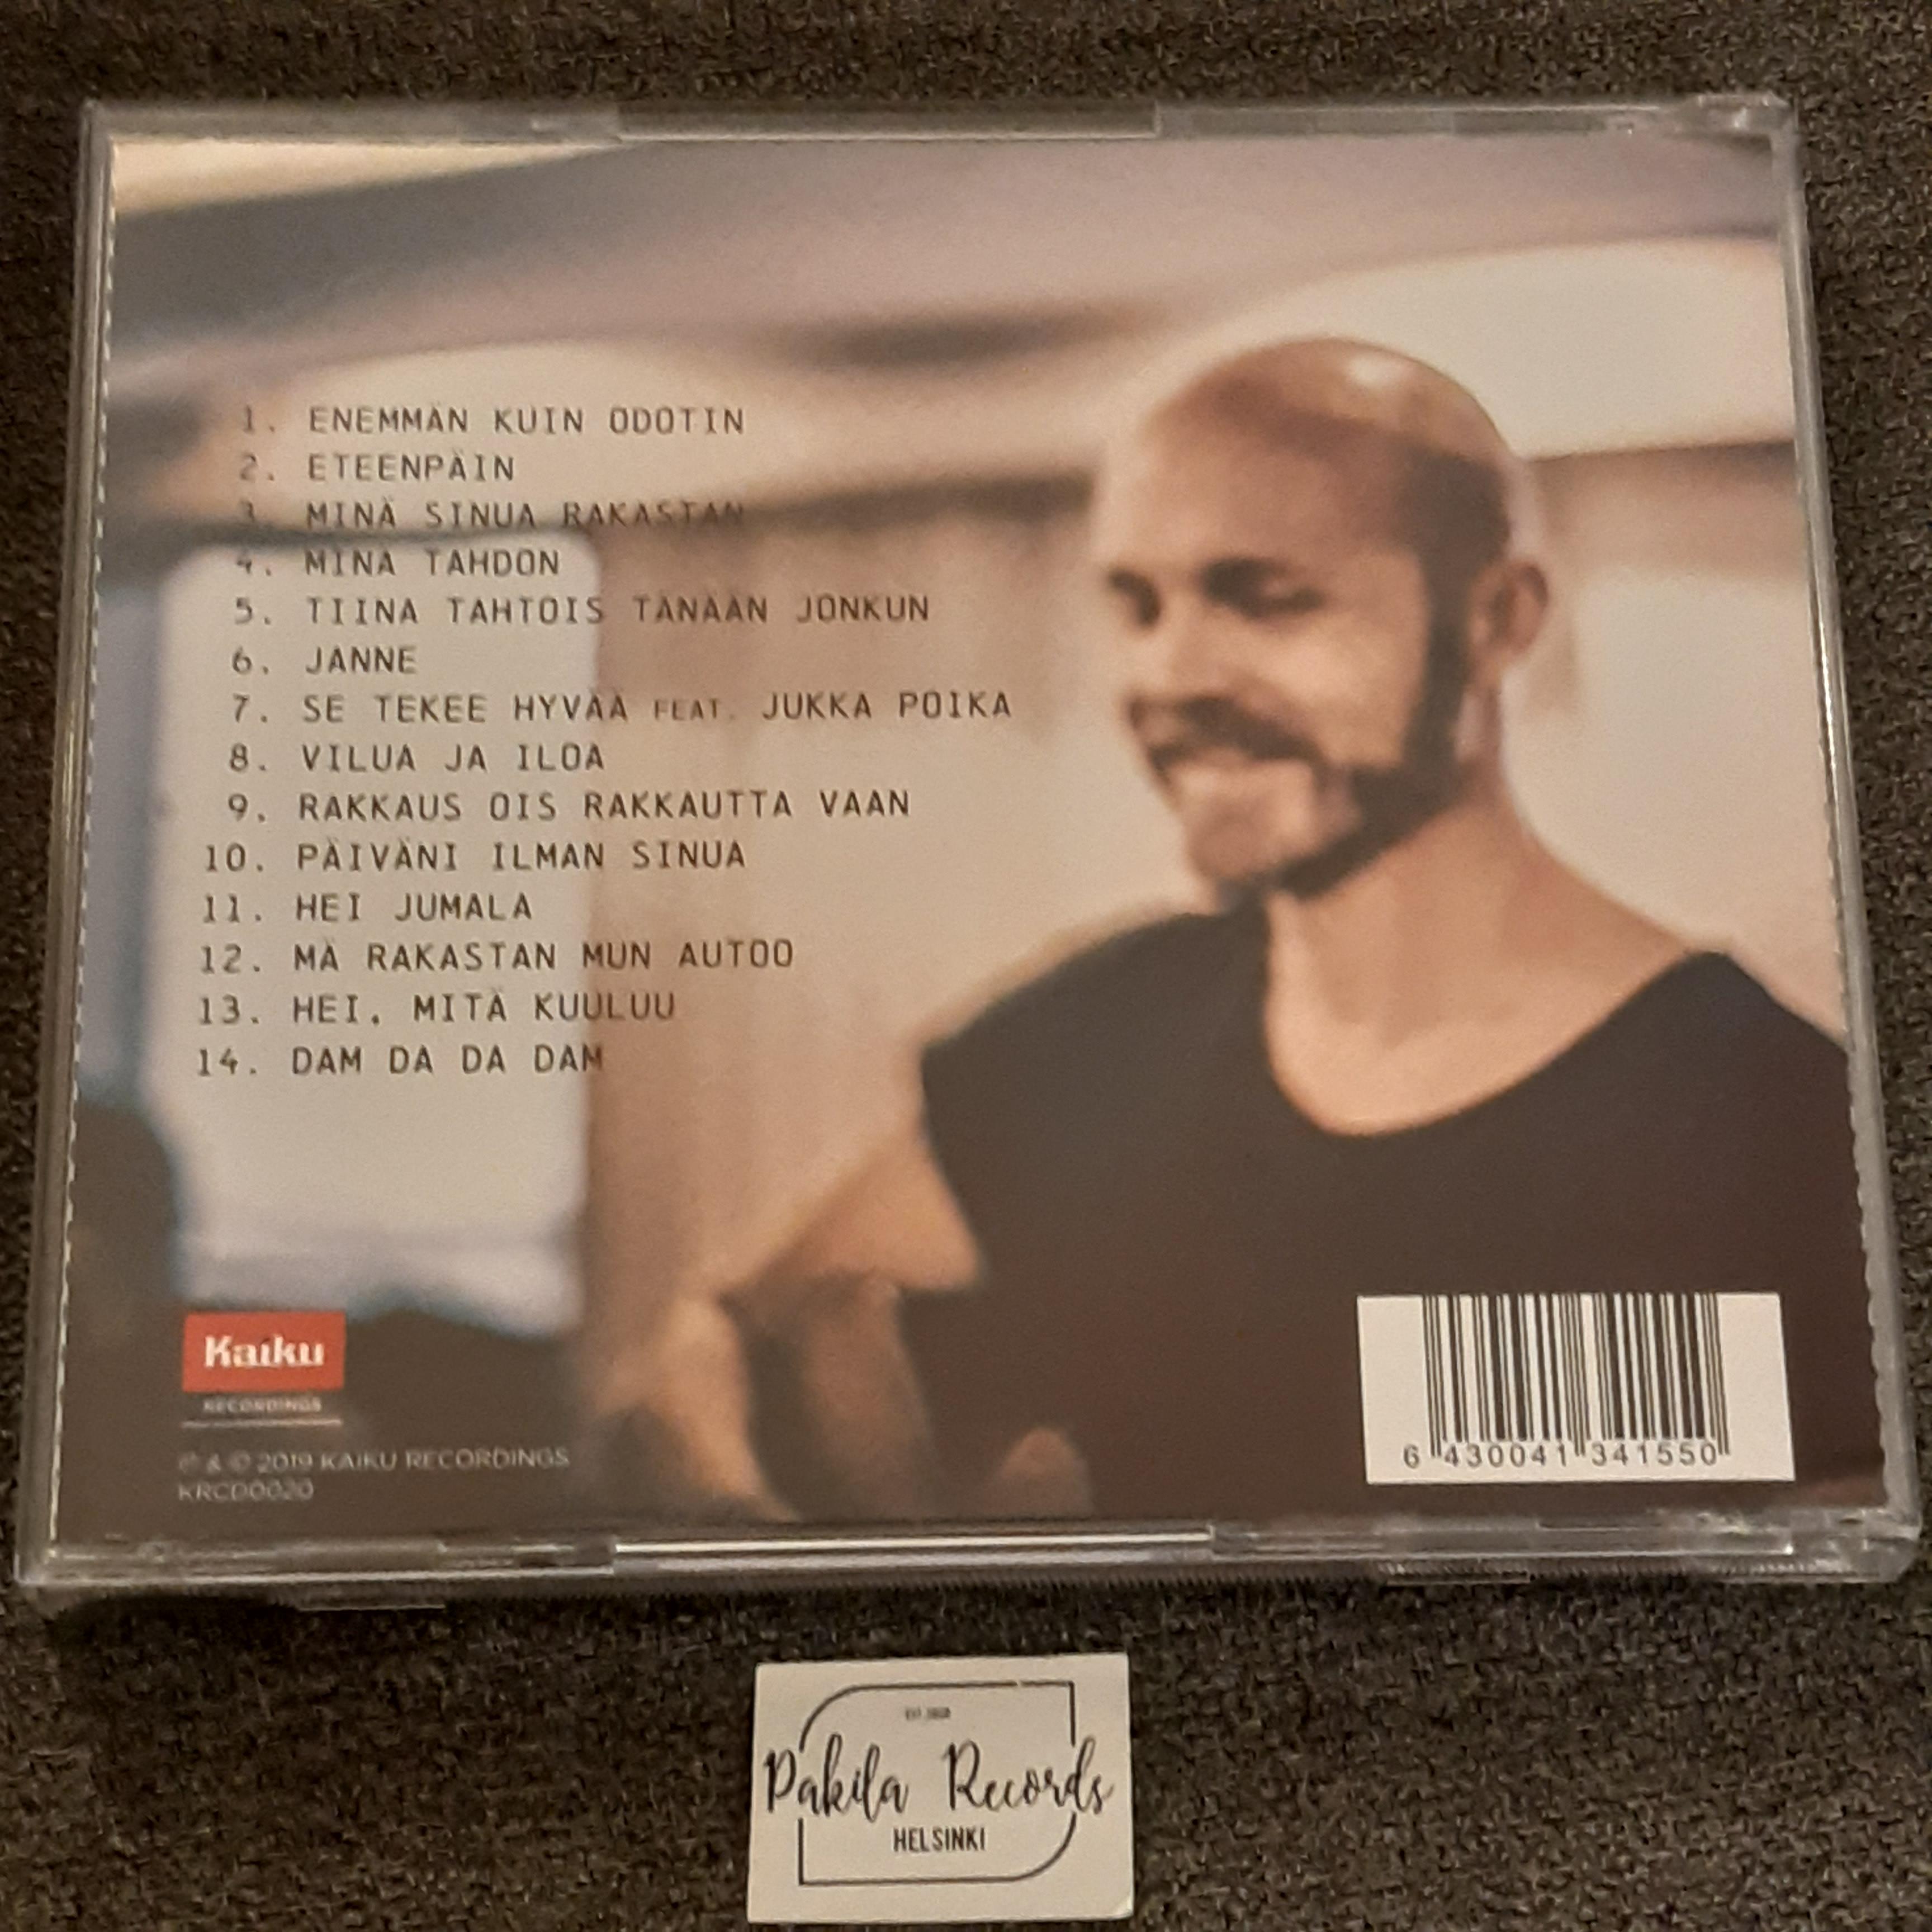 Juha Tapio - Pieniä taikoja - CD (käytetty)